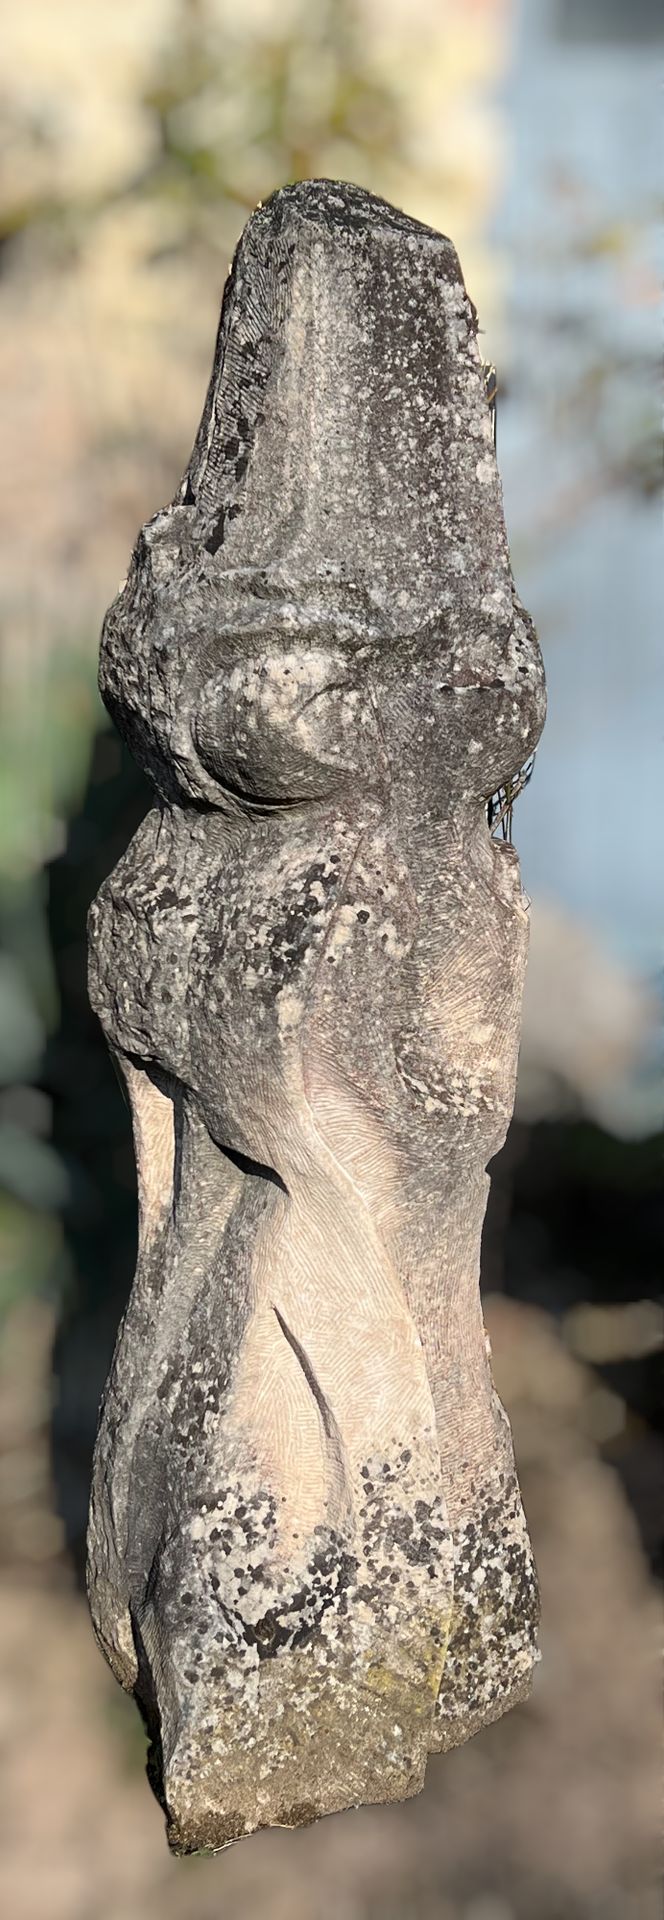 Null Christian ODDOUX (1947-2022), "图腾", 石灰岩, 高: 180 cm

在艺术家Christian Oddoux家中展&hellip;